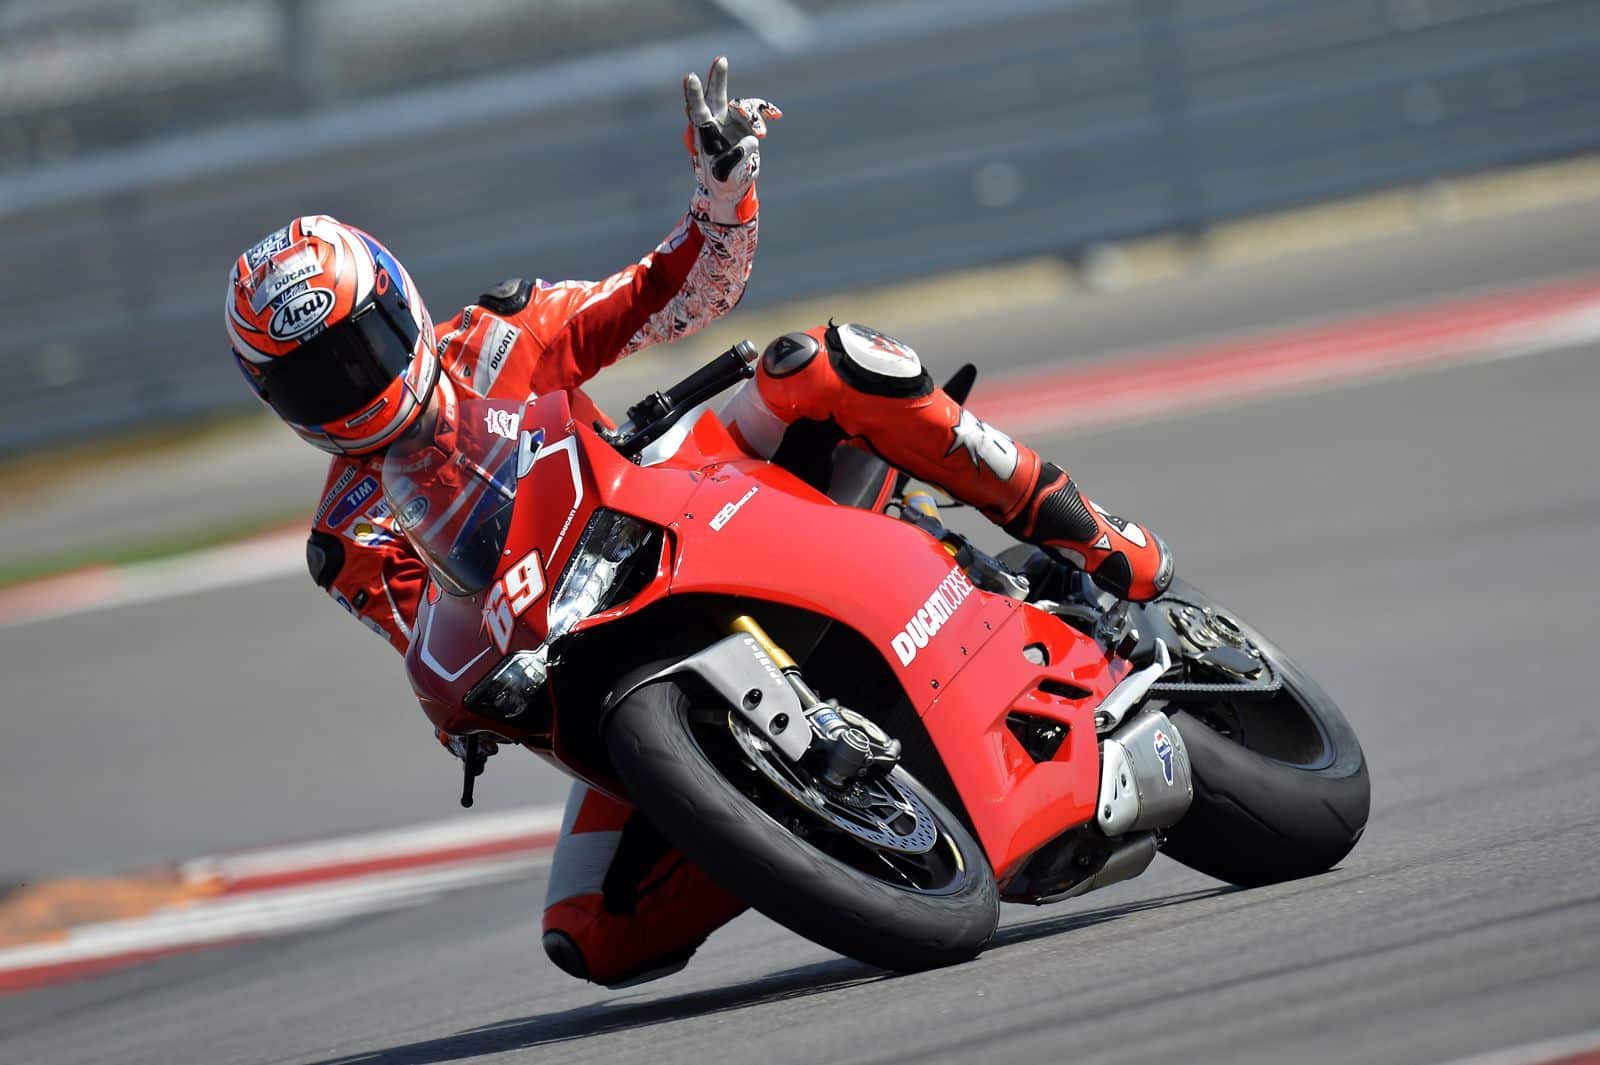 2013 Ducati 1199 Panigale 02